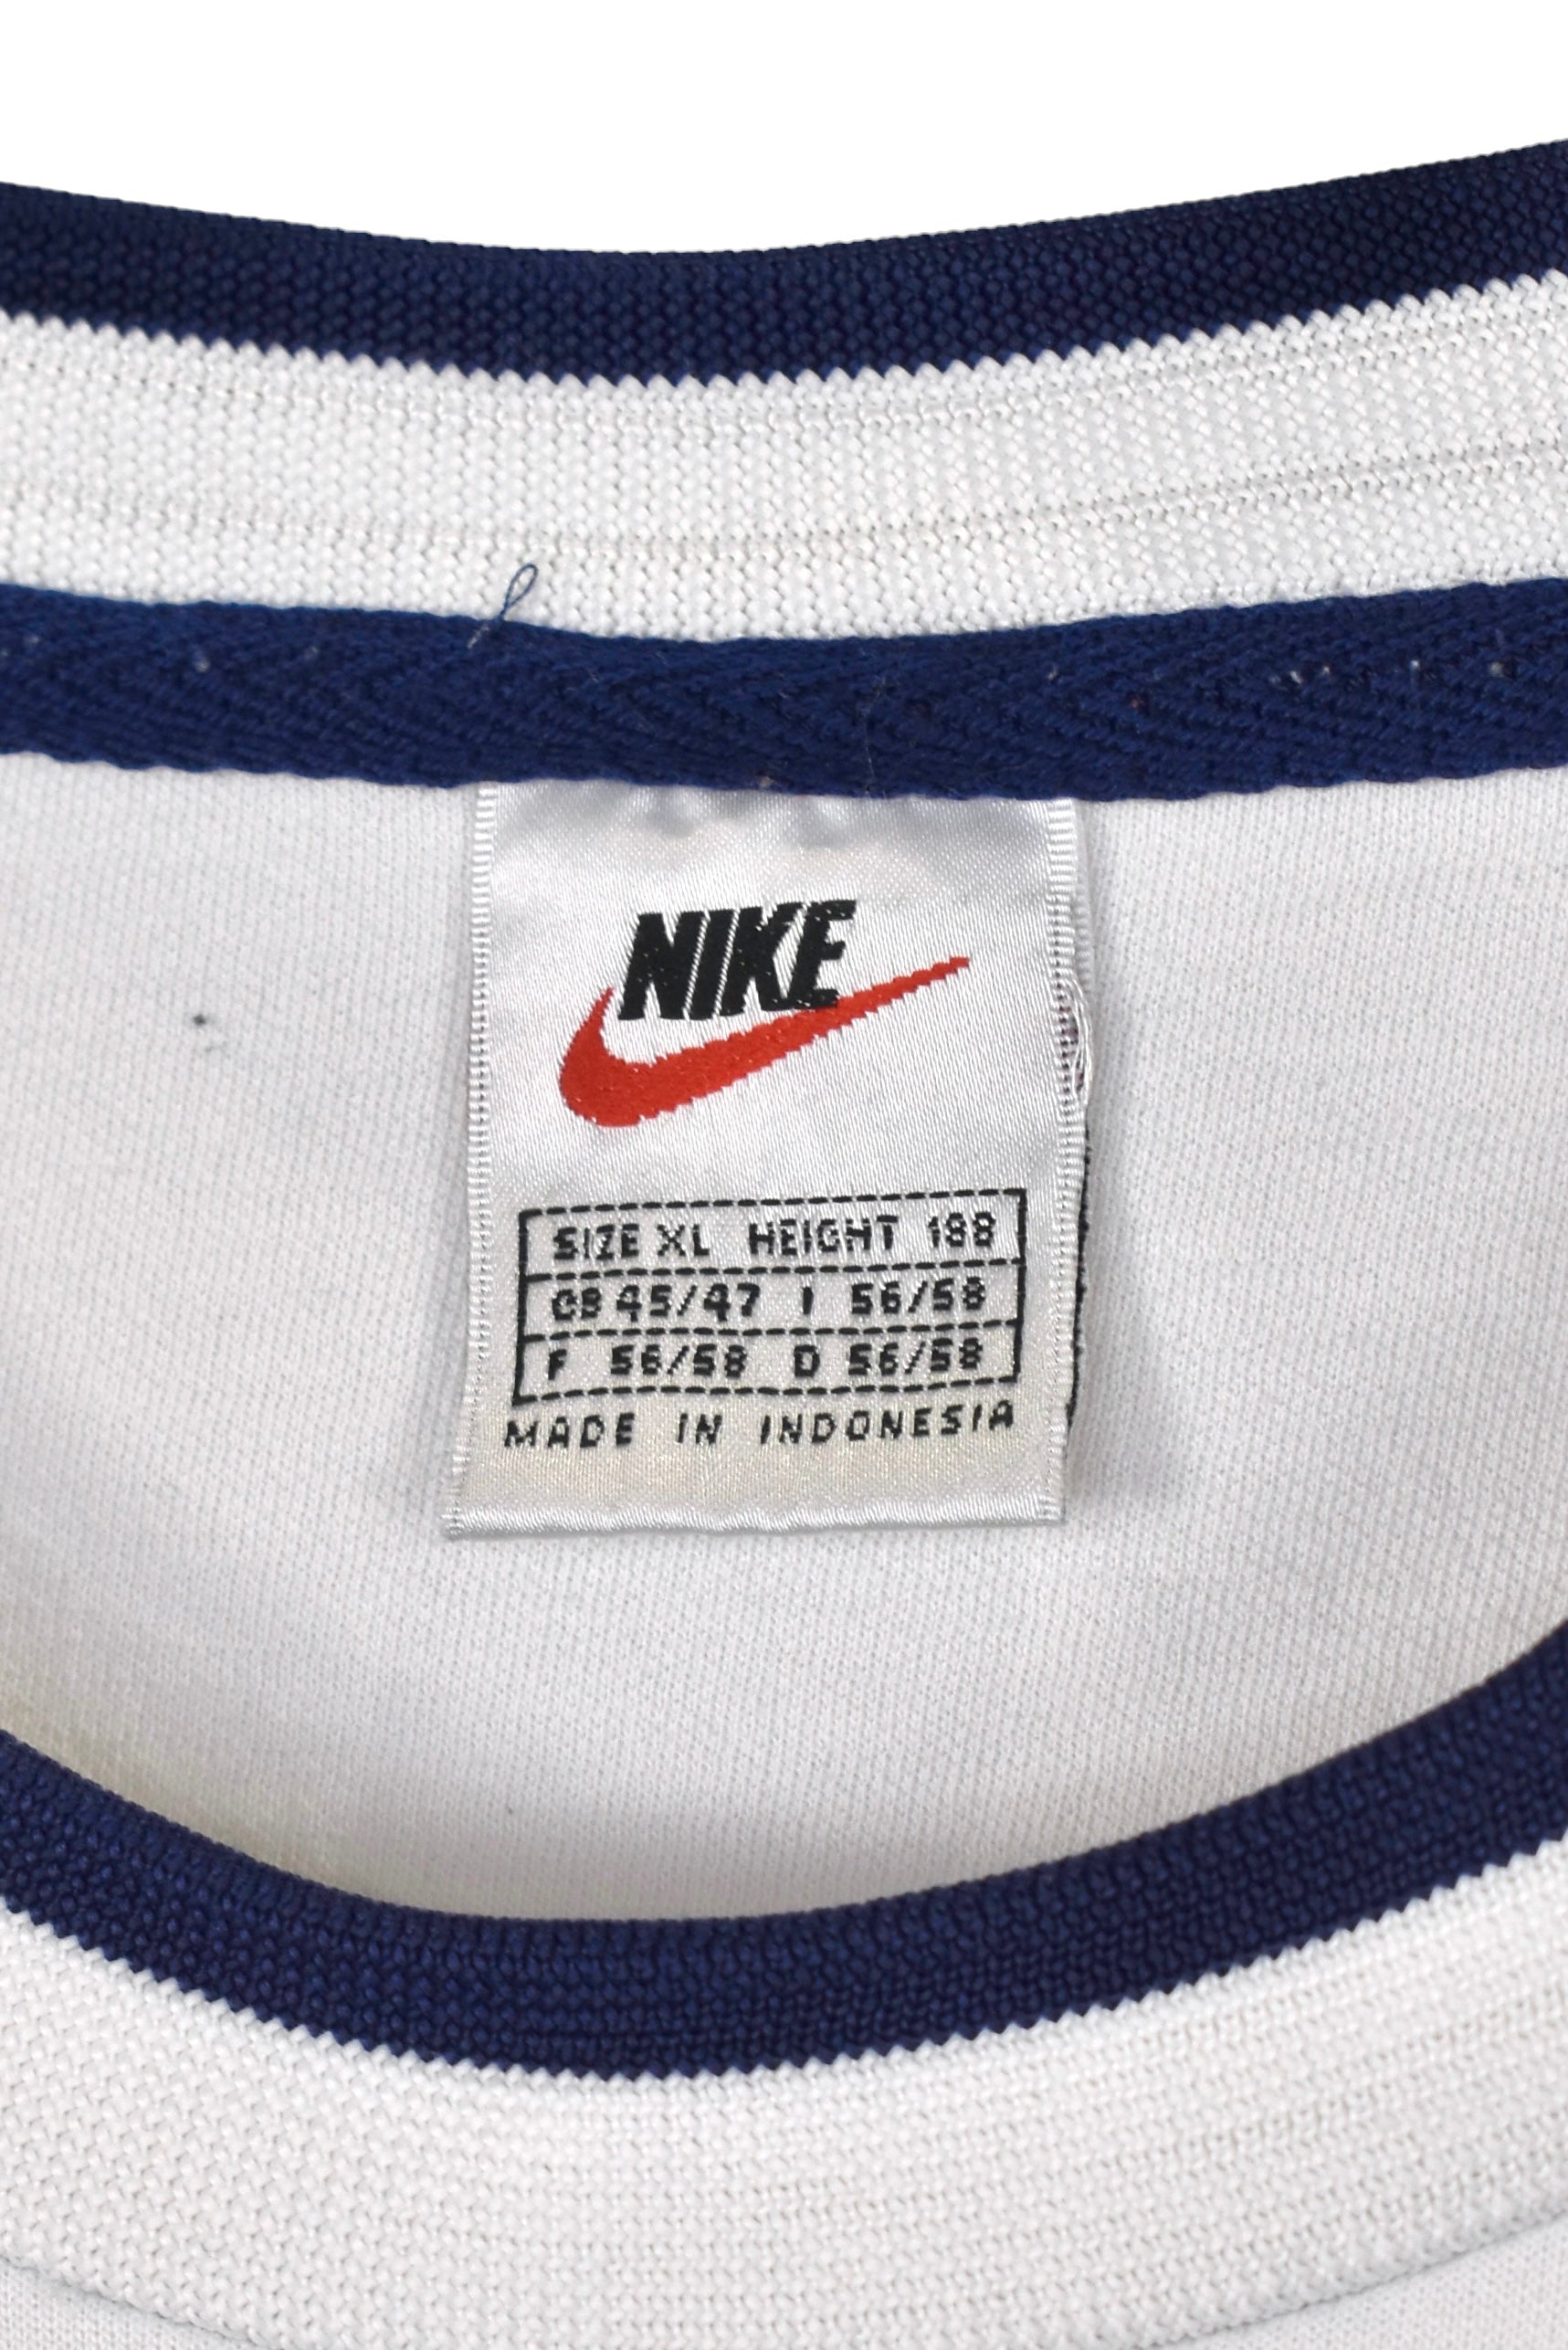 Vintage Nike sweatshirt, white embroidered crewneck - XL